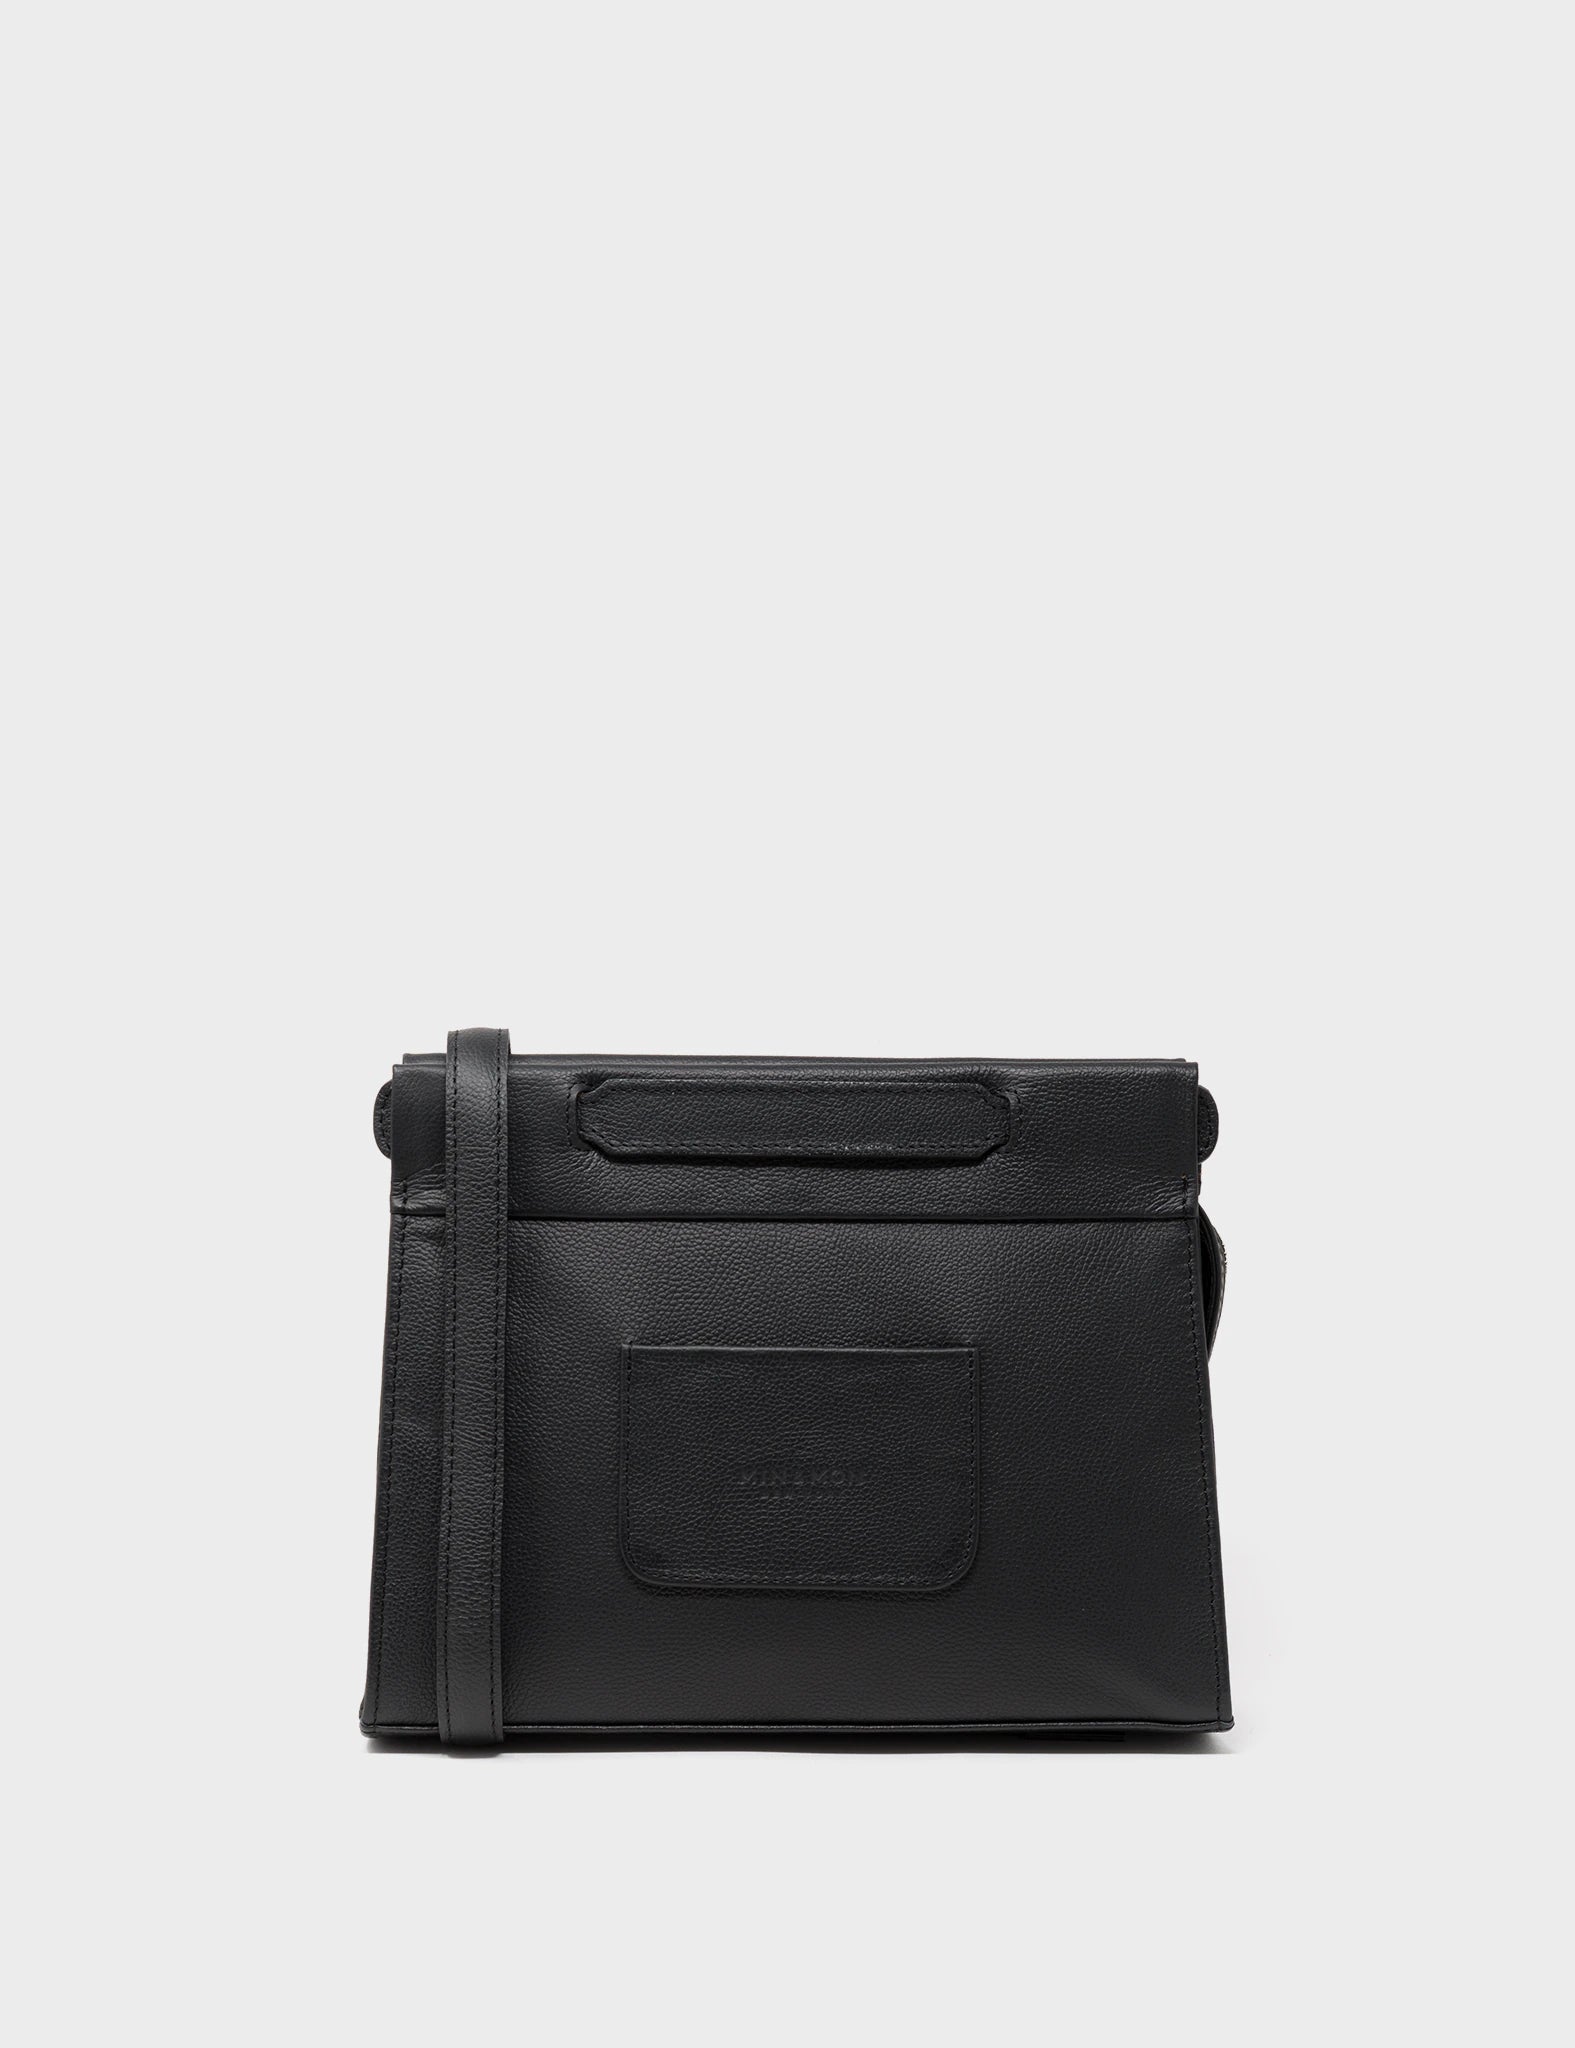 Vali Crossbody Small Black Leather Bag - Eyes Applique Adjustable Handle - Back view